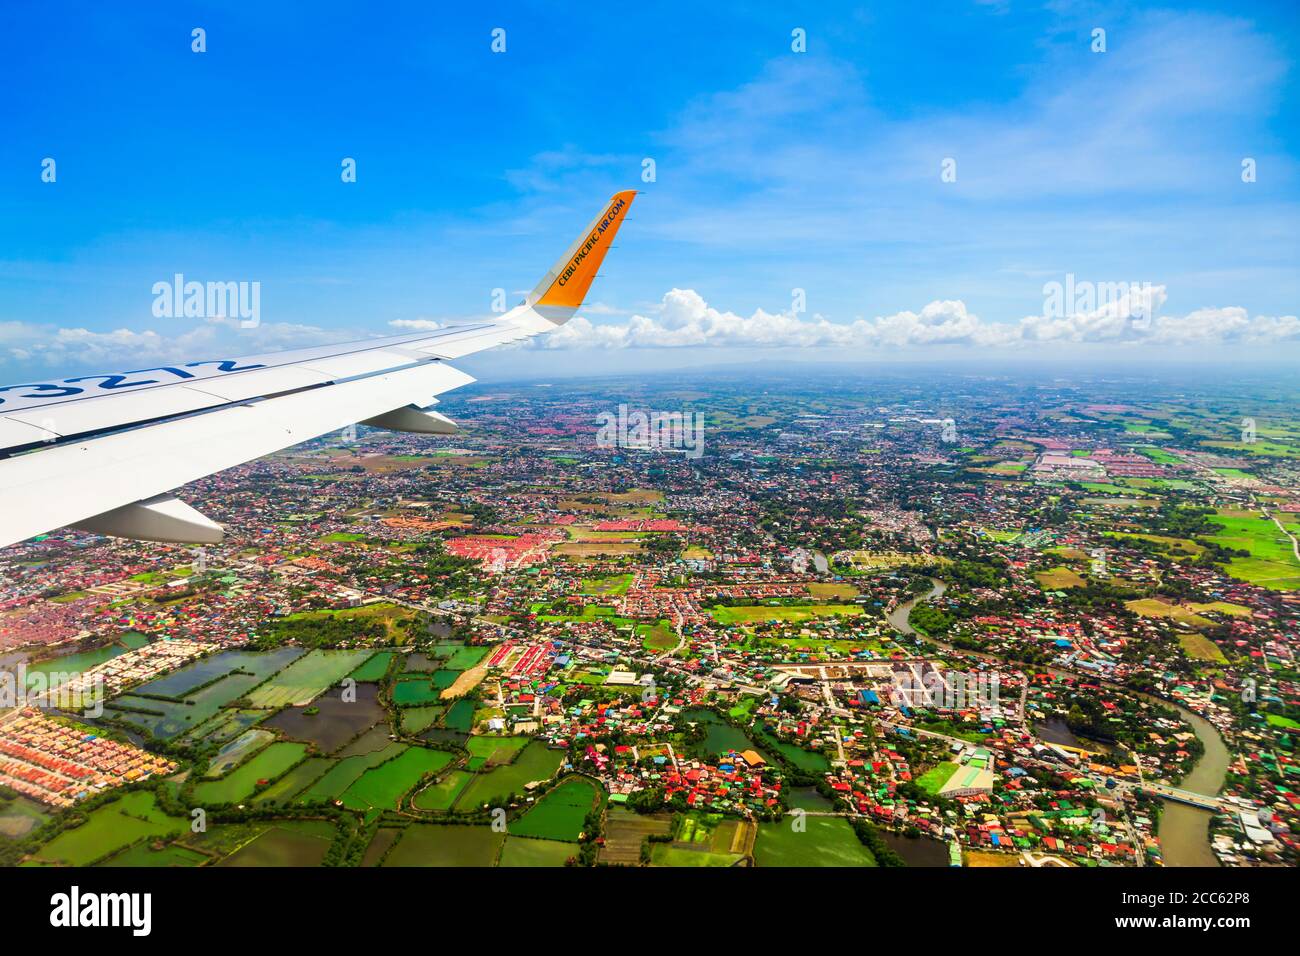 MANILA, PHILIPPINES - FEBRUARY 23, 2013: Cebu Pacific airplane wing above the Manila city suburbs in Philippines Stock Photo